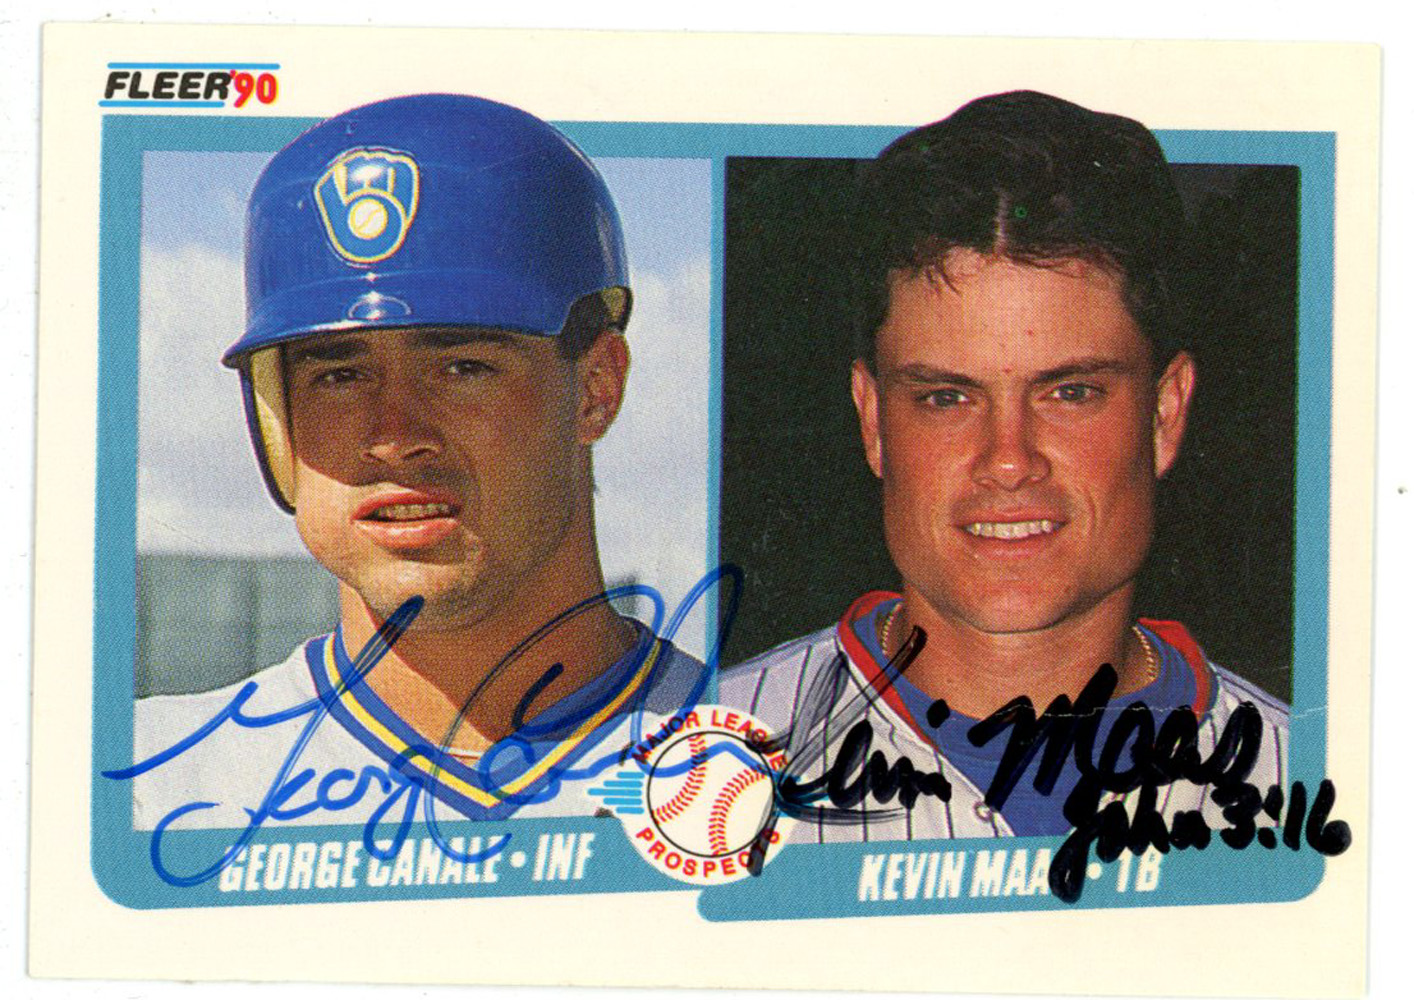 George Canale & Kevin Maas Autographed Yankees/Brewers 1990 Fleer Card